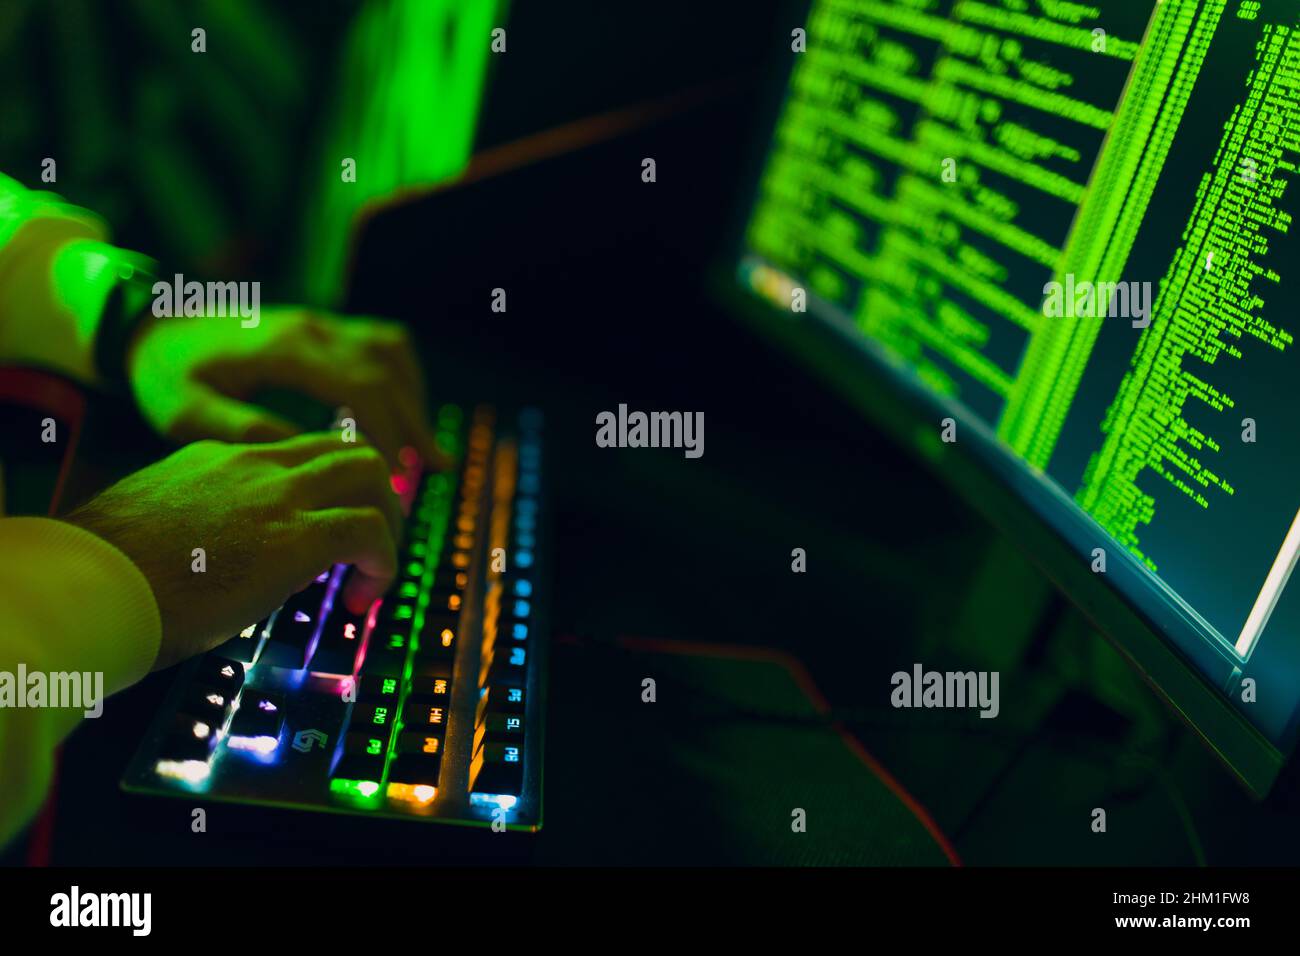 Hacker using computer malware software and hacking binary code green digital interface hands keyboard close up Stock Photo